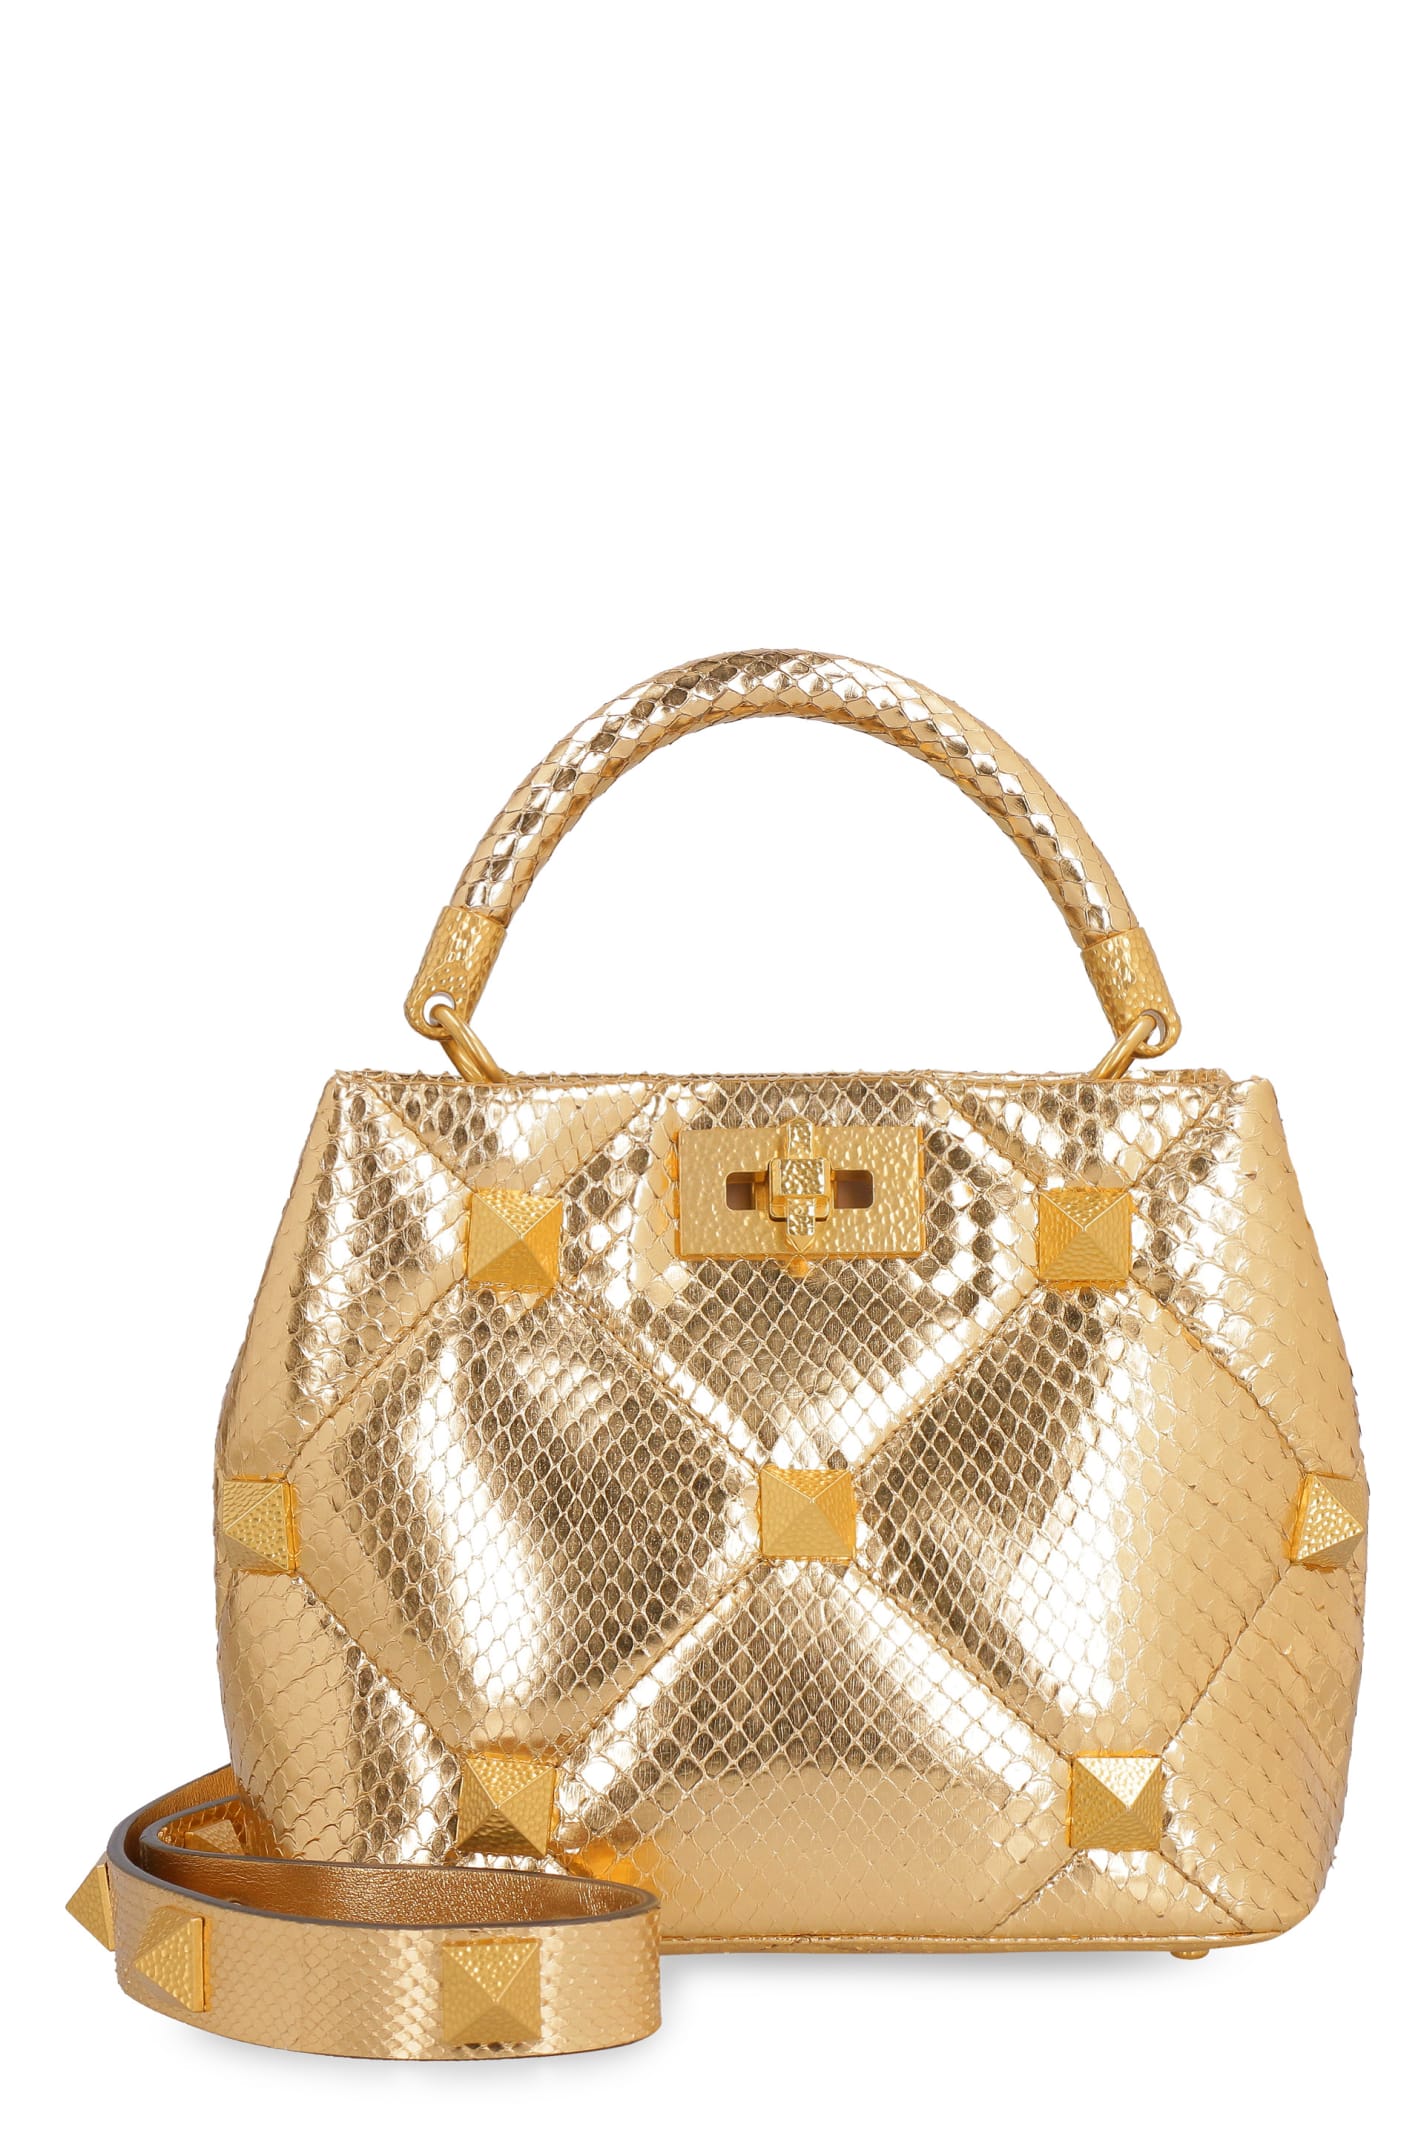 Valentino Garavani - Roman Stud Python Leather Handbag